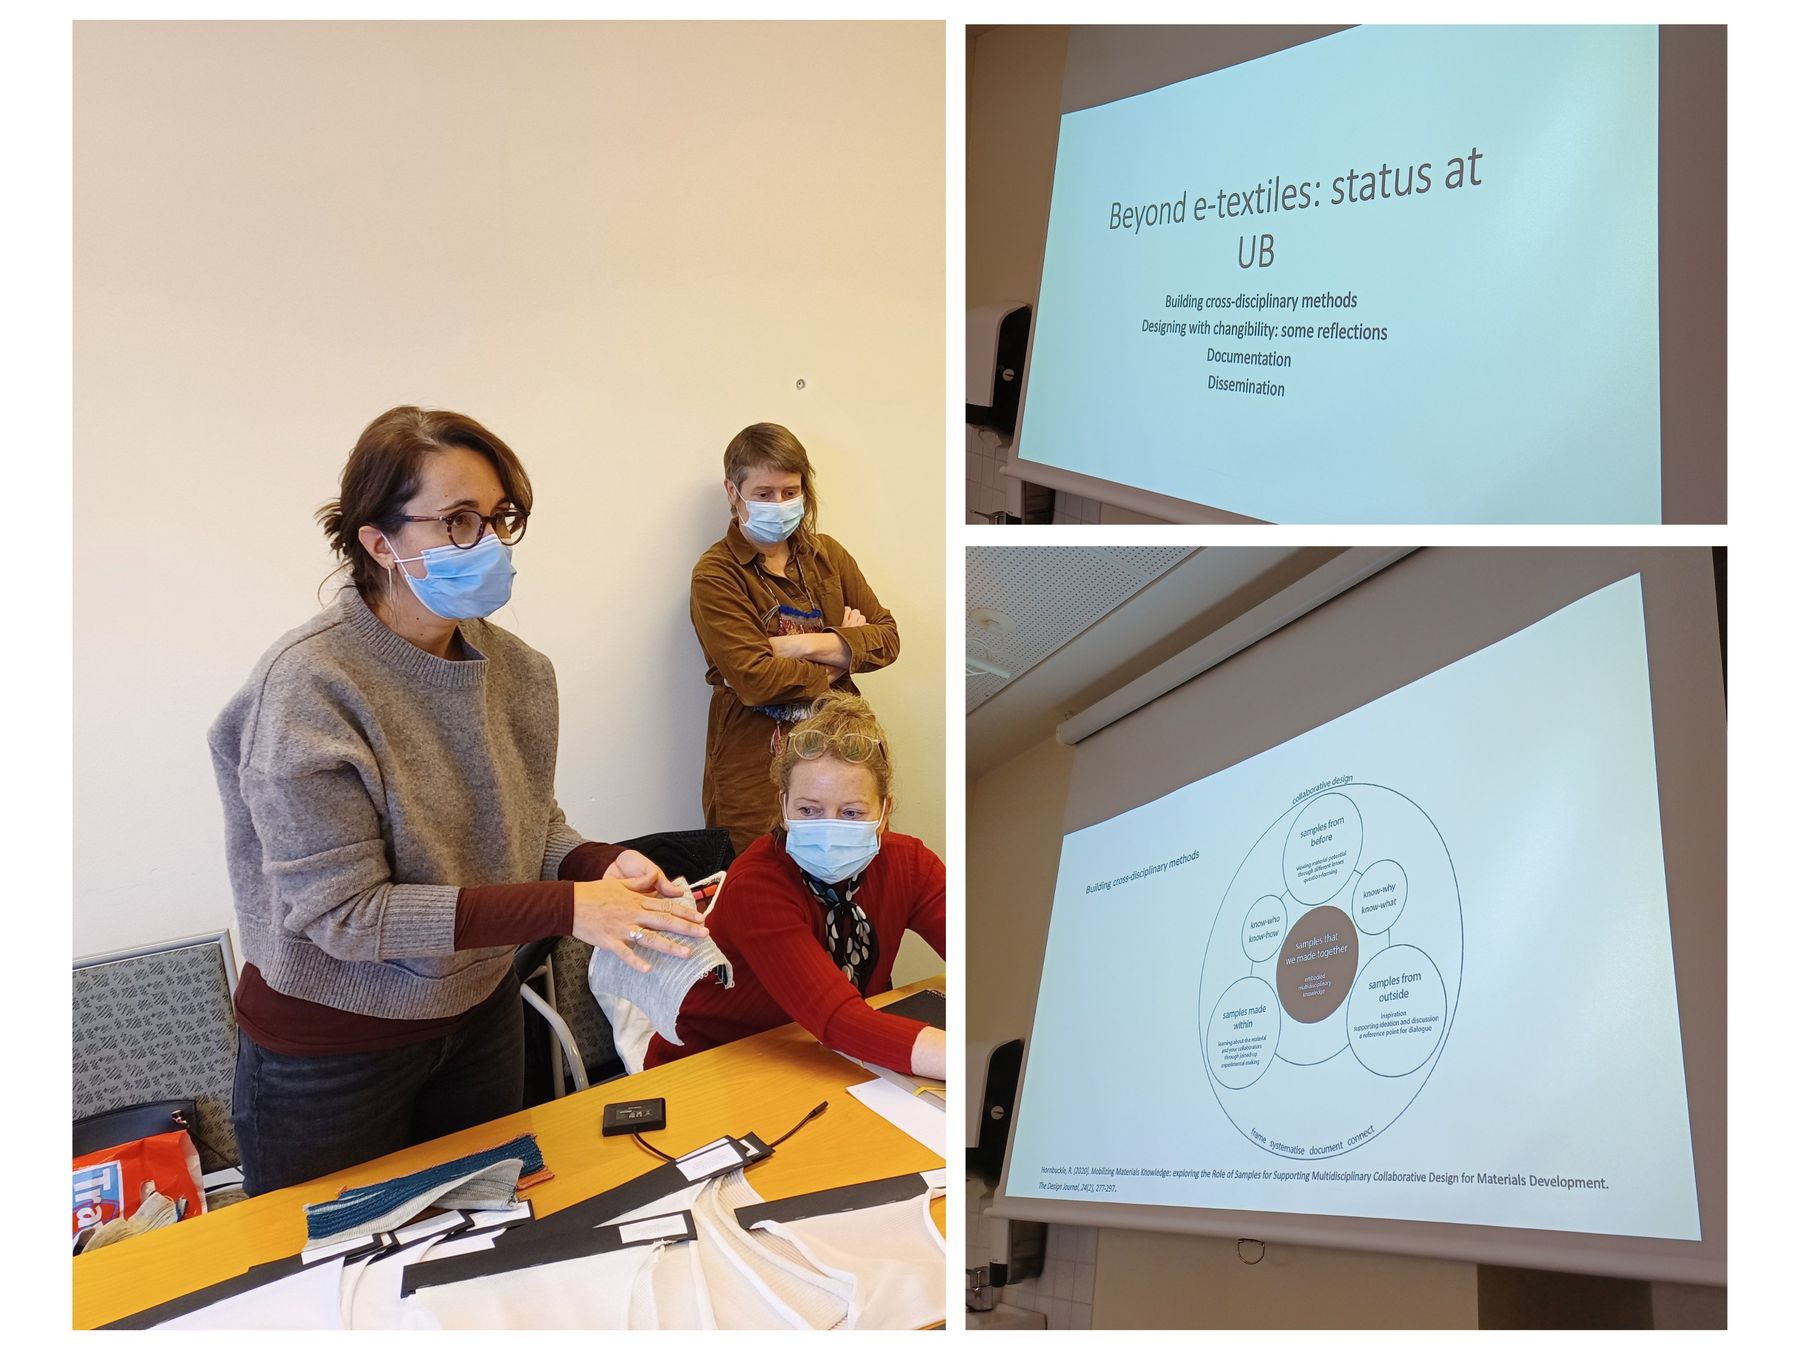 Presentation by Delia Dumitrescu (UB team). Photos by Aalto University, Giulnara Launonen